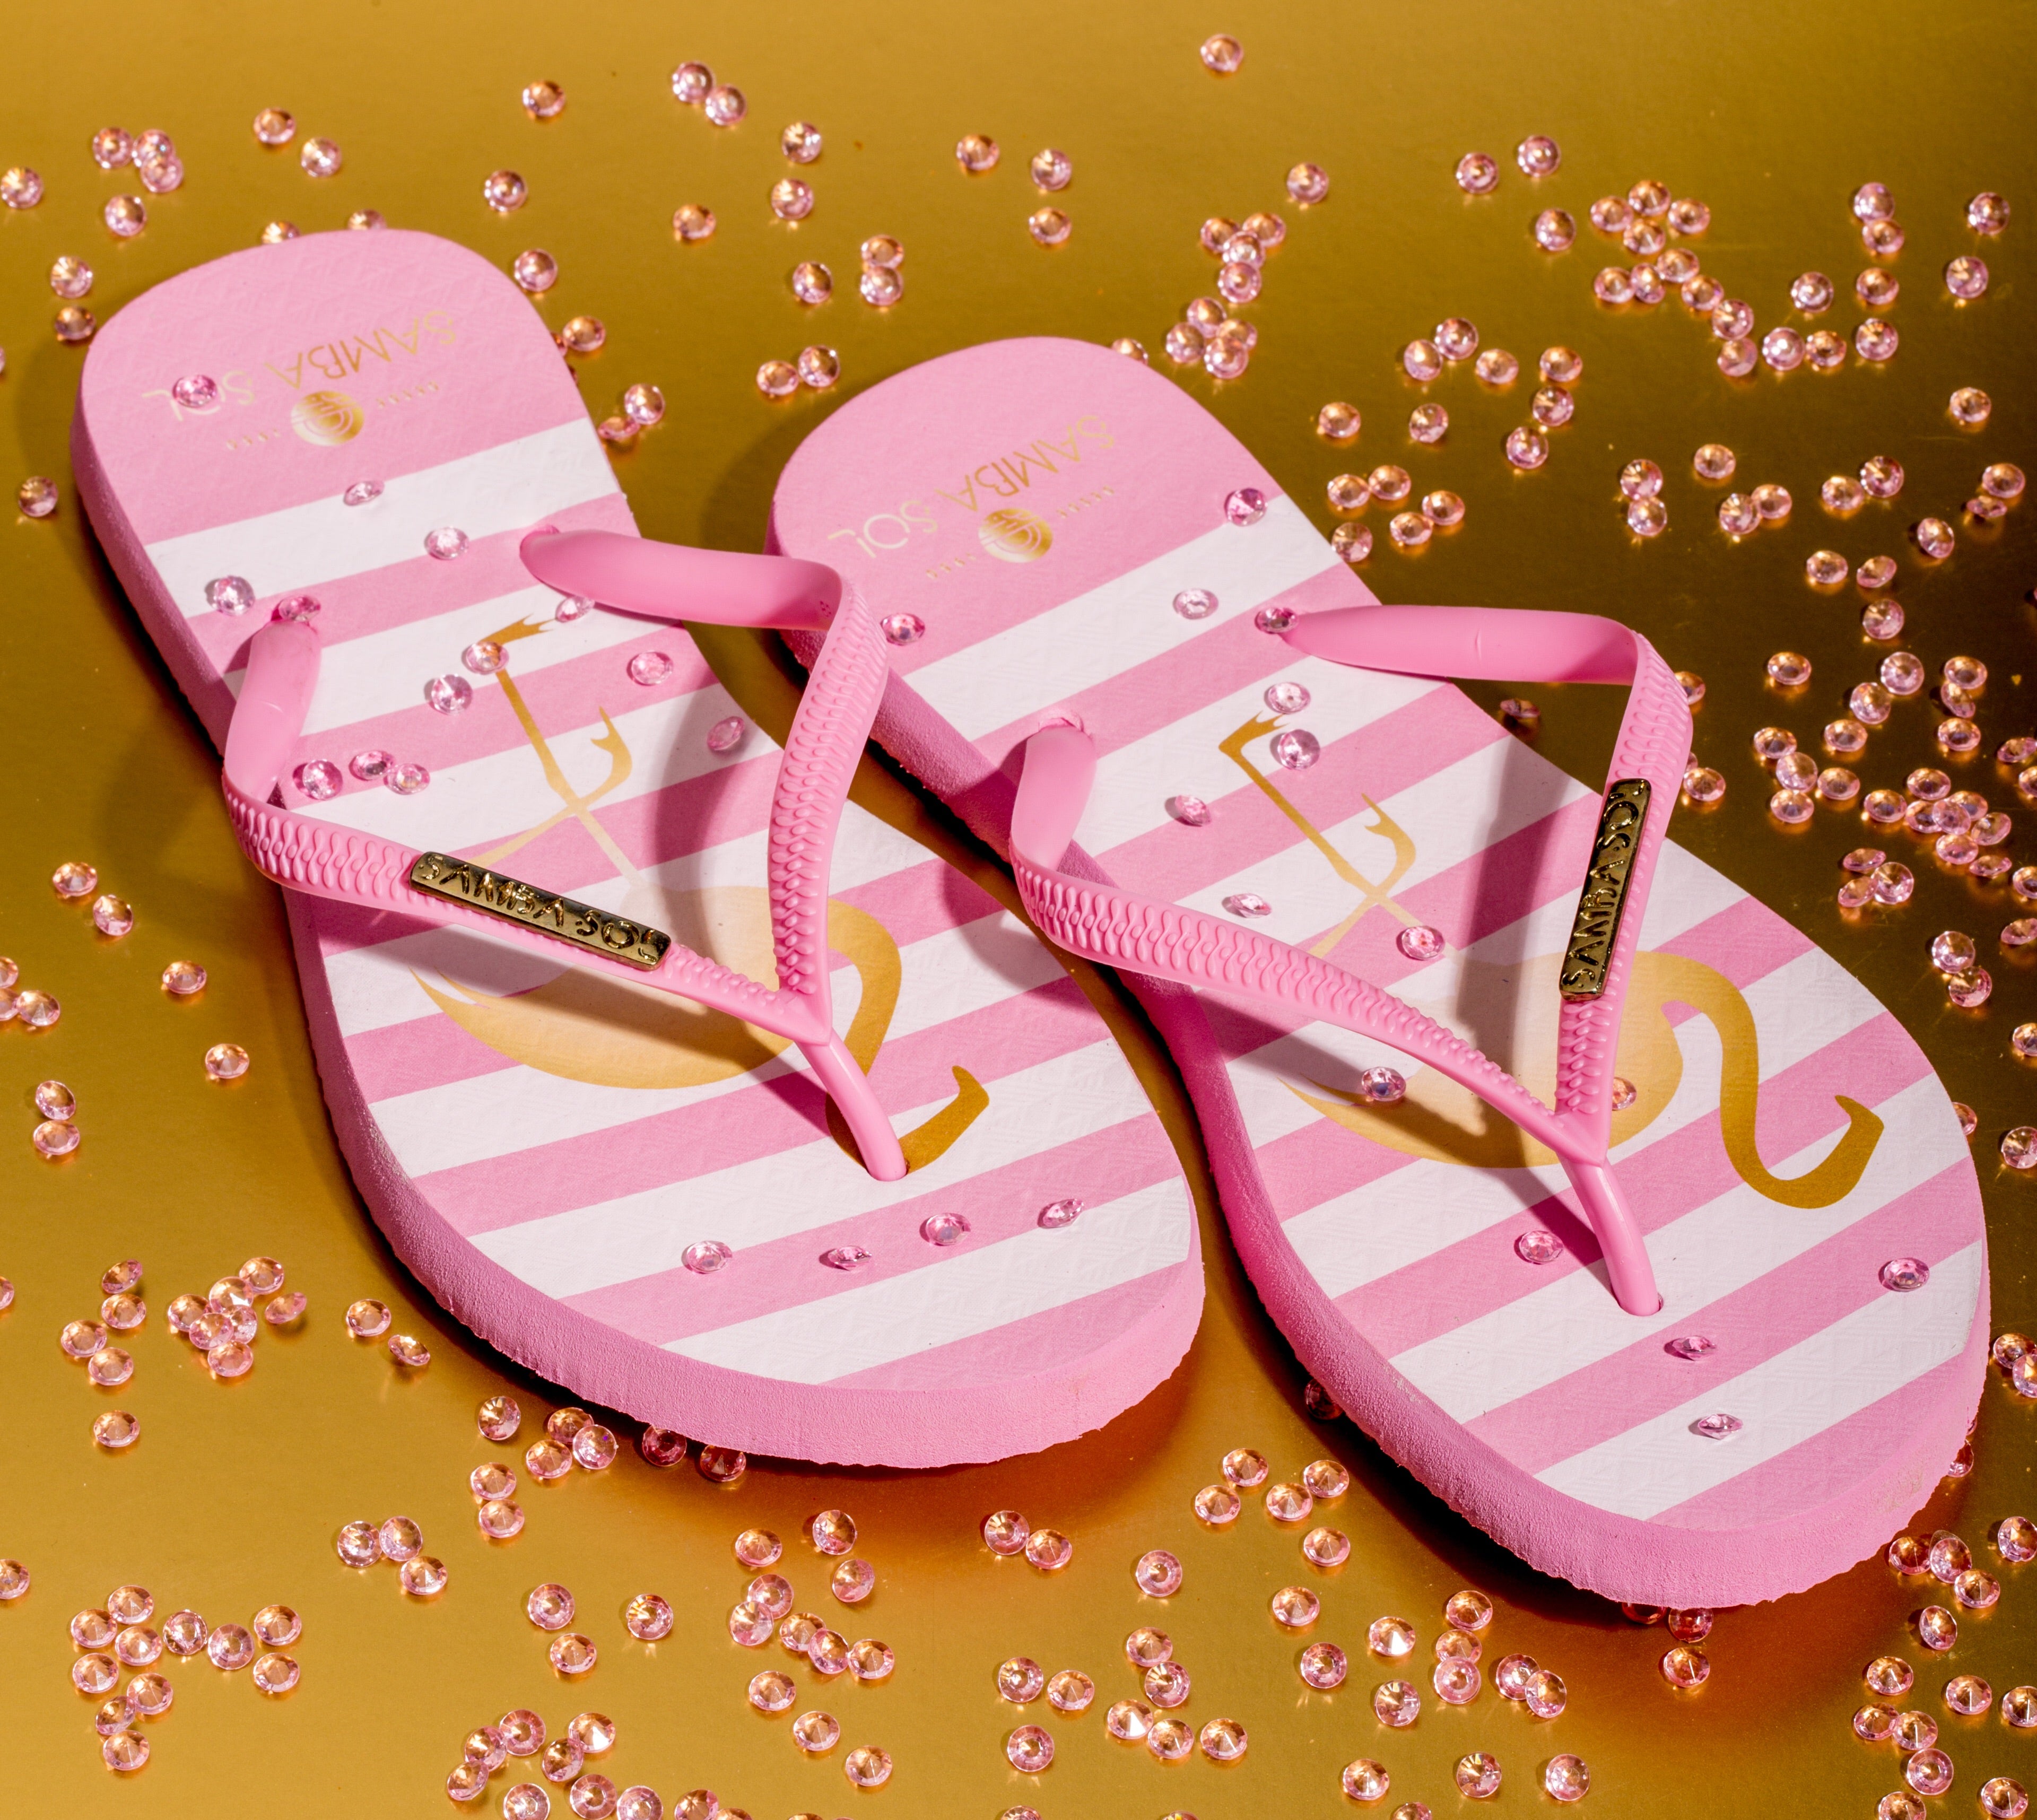 Samba Sol Women's Fashion Collection Flip Flops - Flamingo